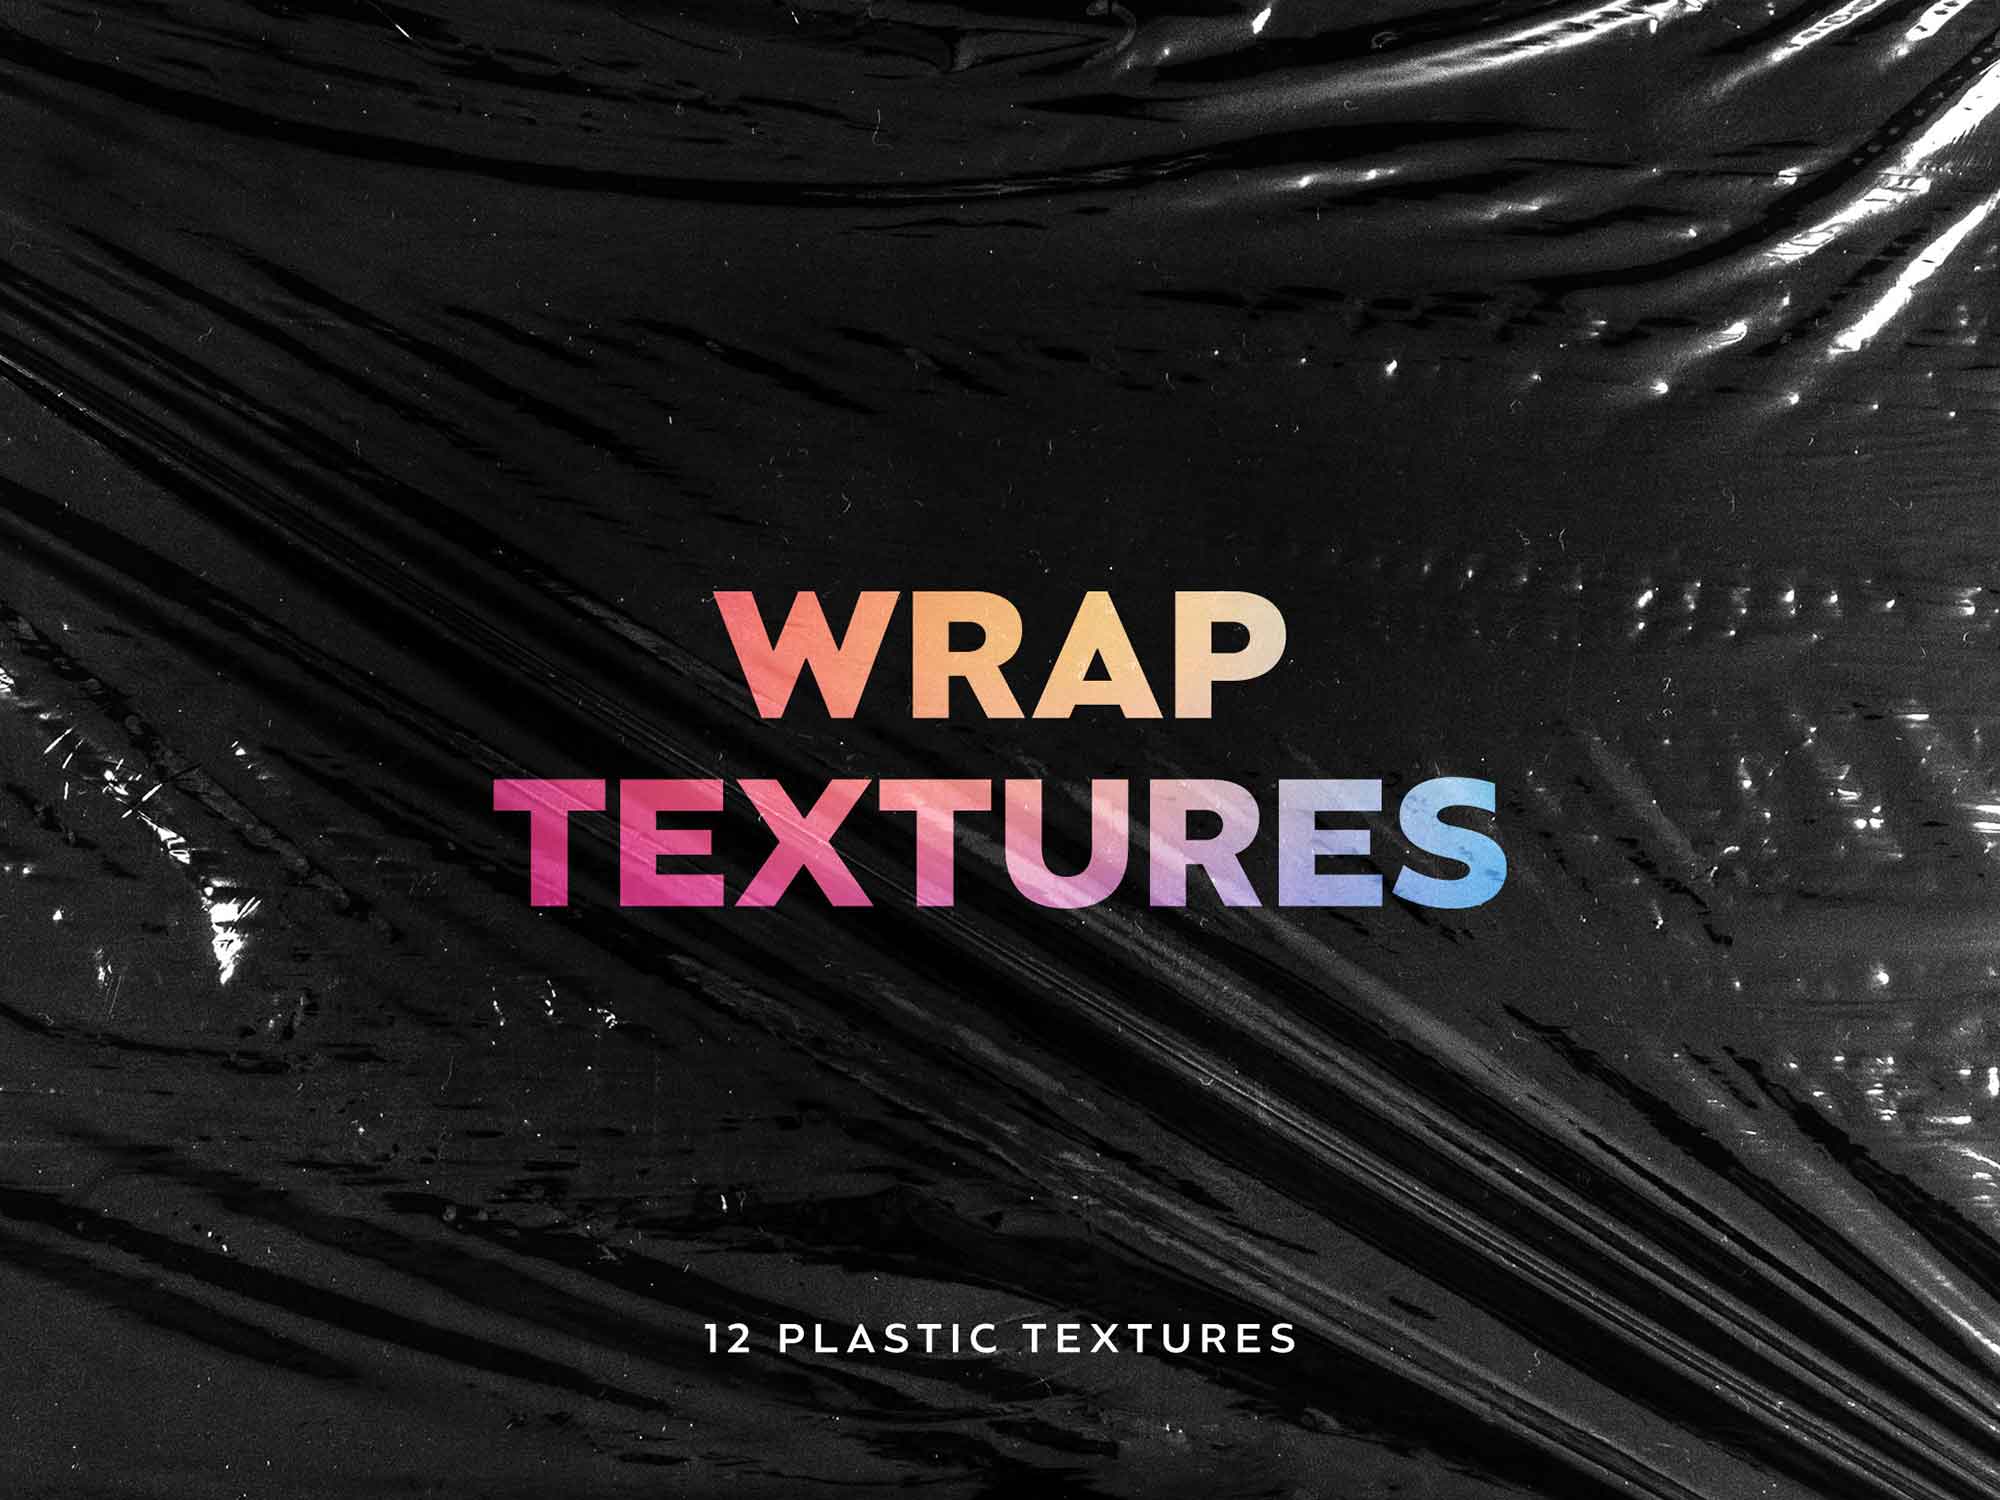 Free Plastic Wrap Texture Mockup (PSD)